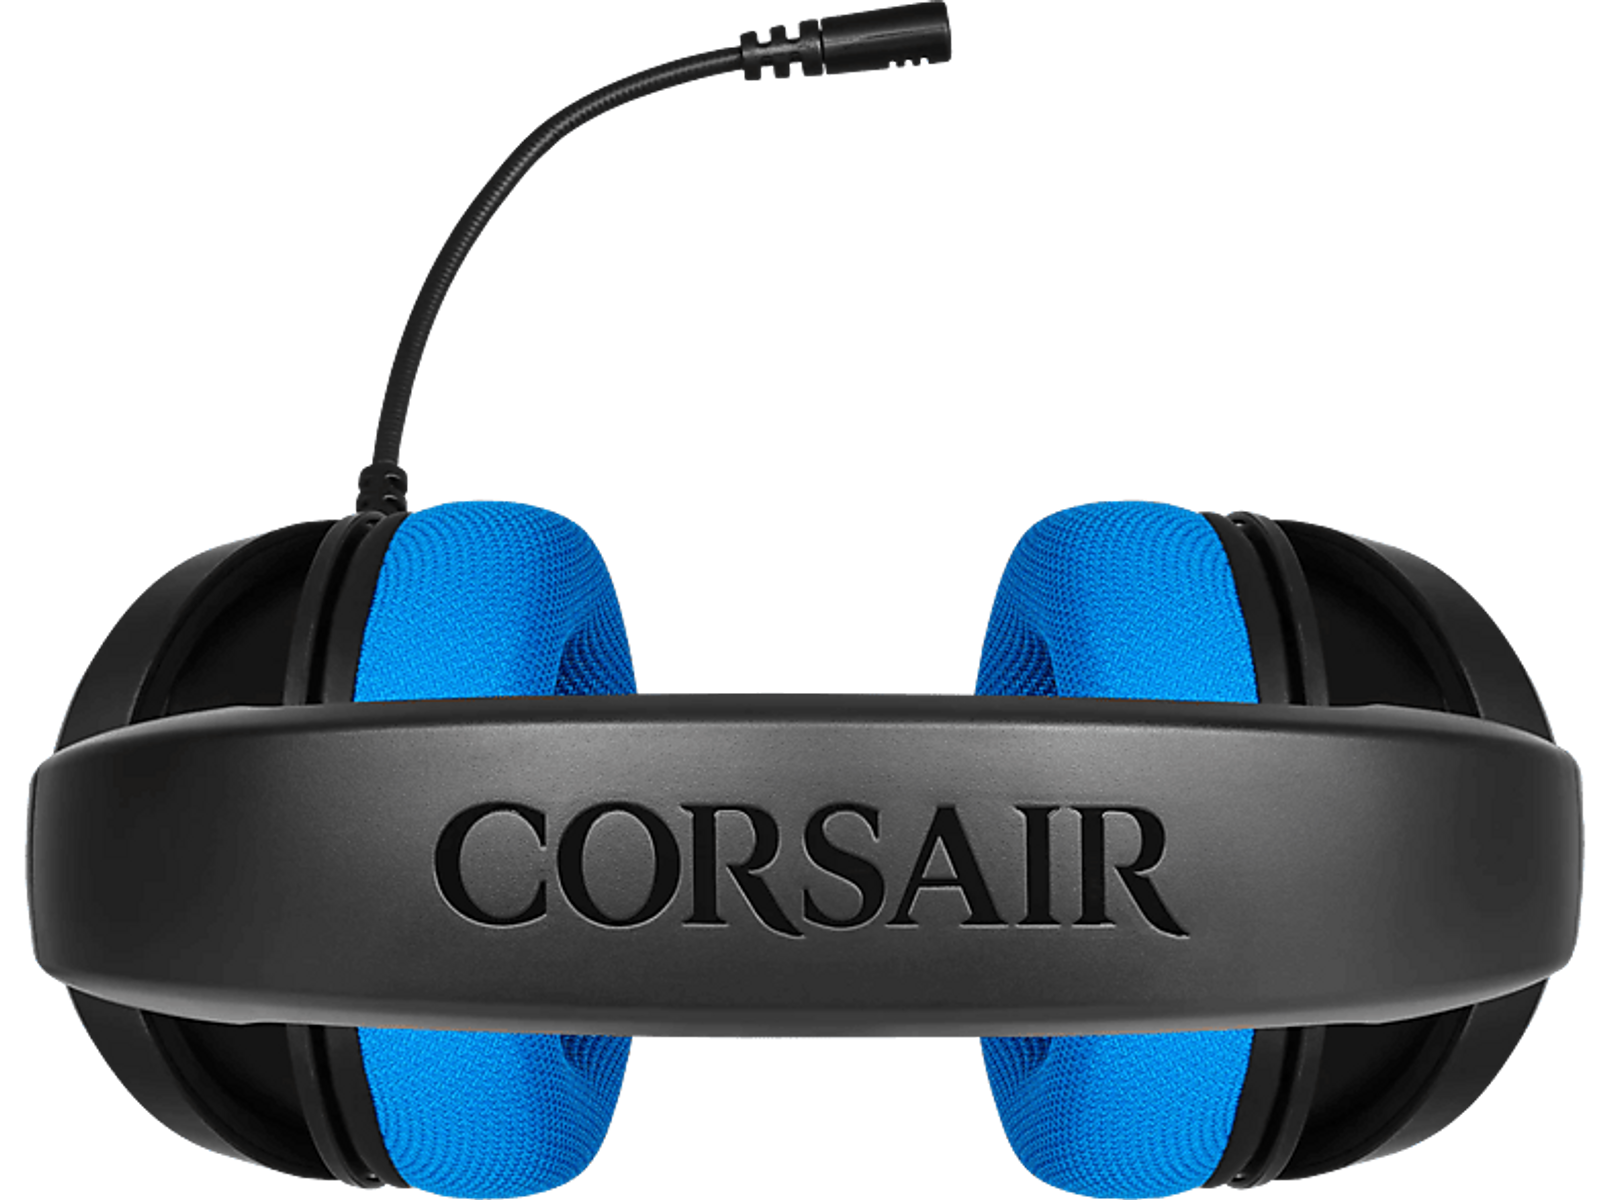 Schwarz/Blau STEREO CORSAIR HS35 Gaming BLUE, CA-9011196-EU HEADSET Over-ear Headset